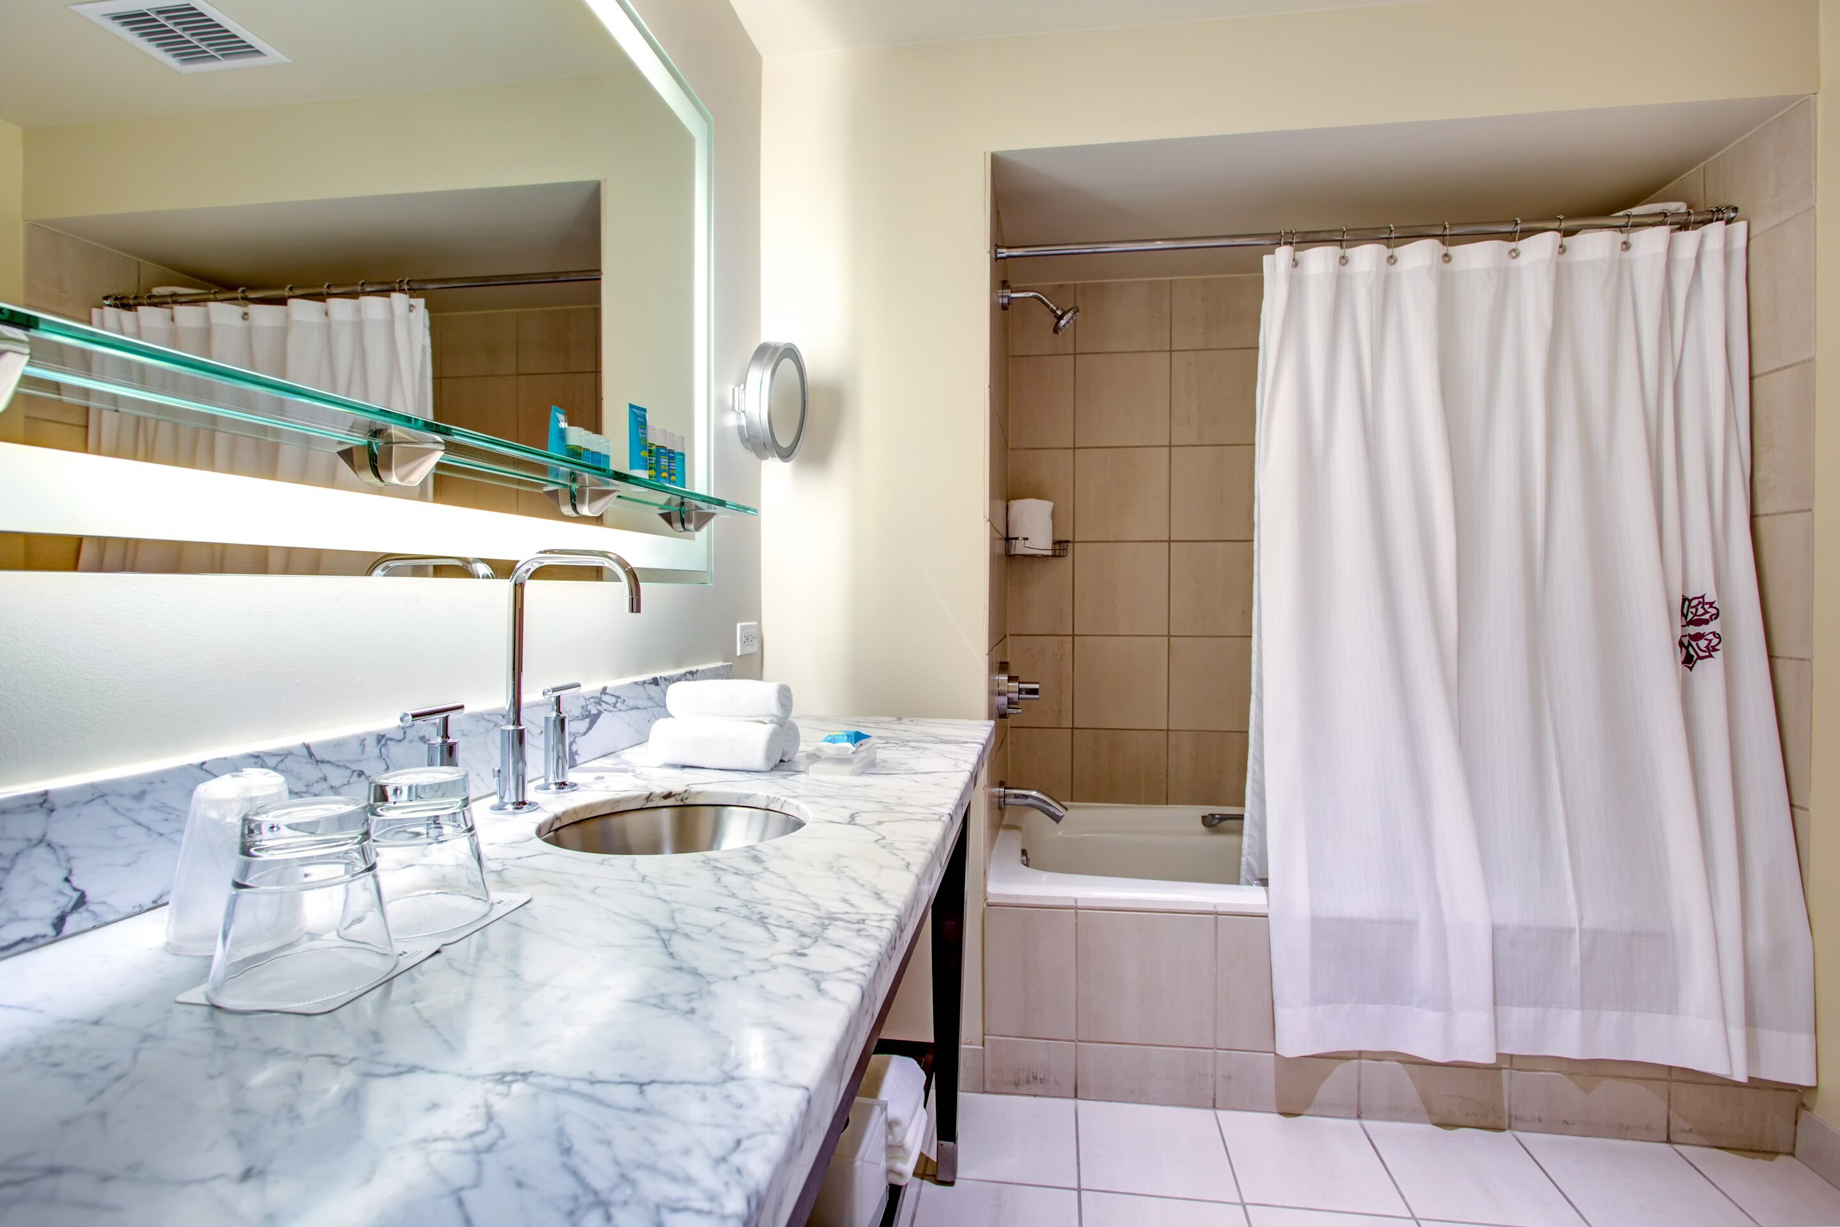 W Chicago City Center Hotel - Chicago, IL, USA - Fabulous Bathroom Vanity